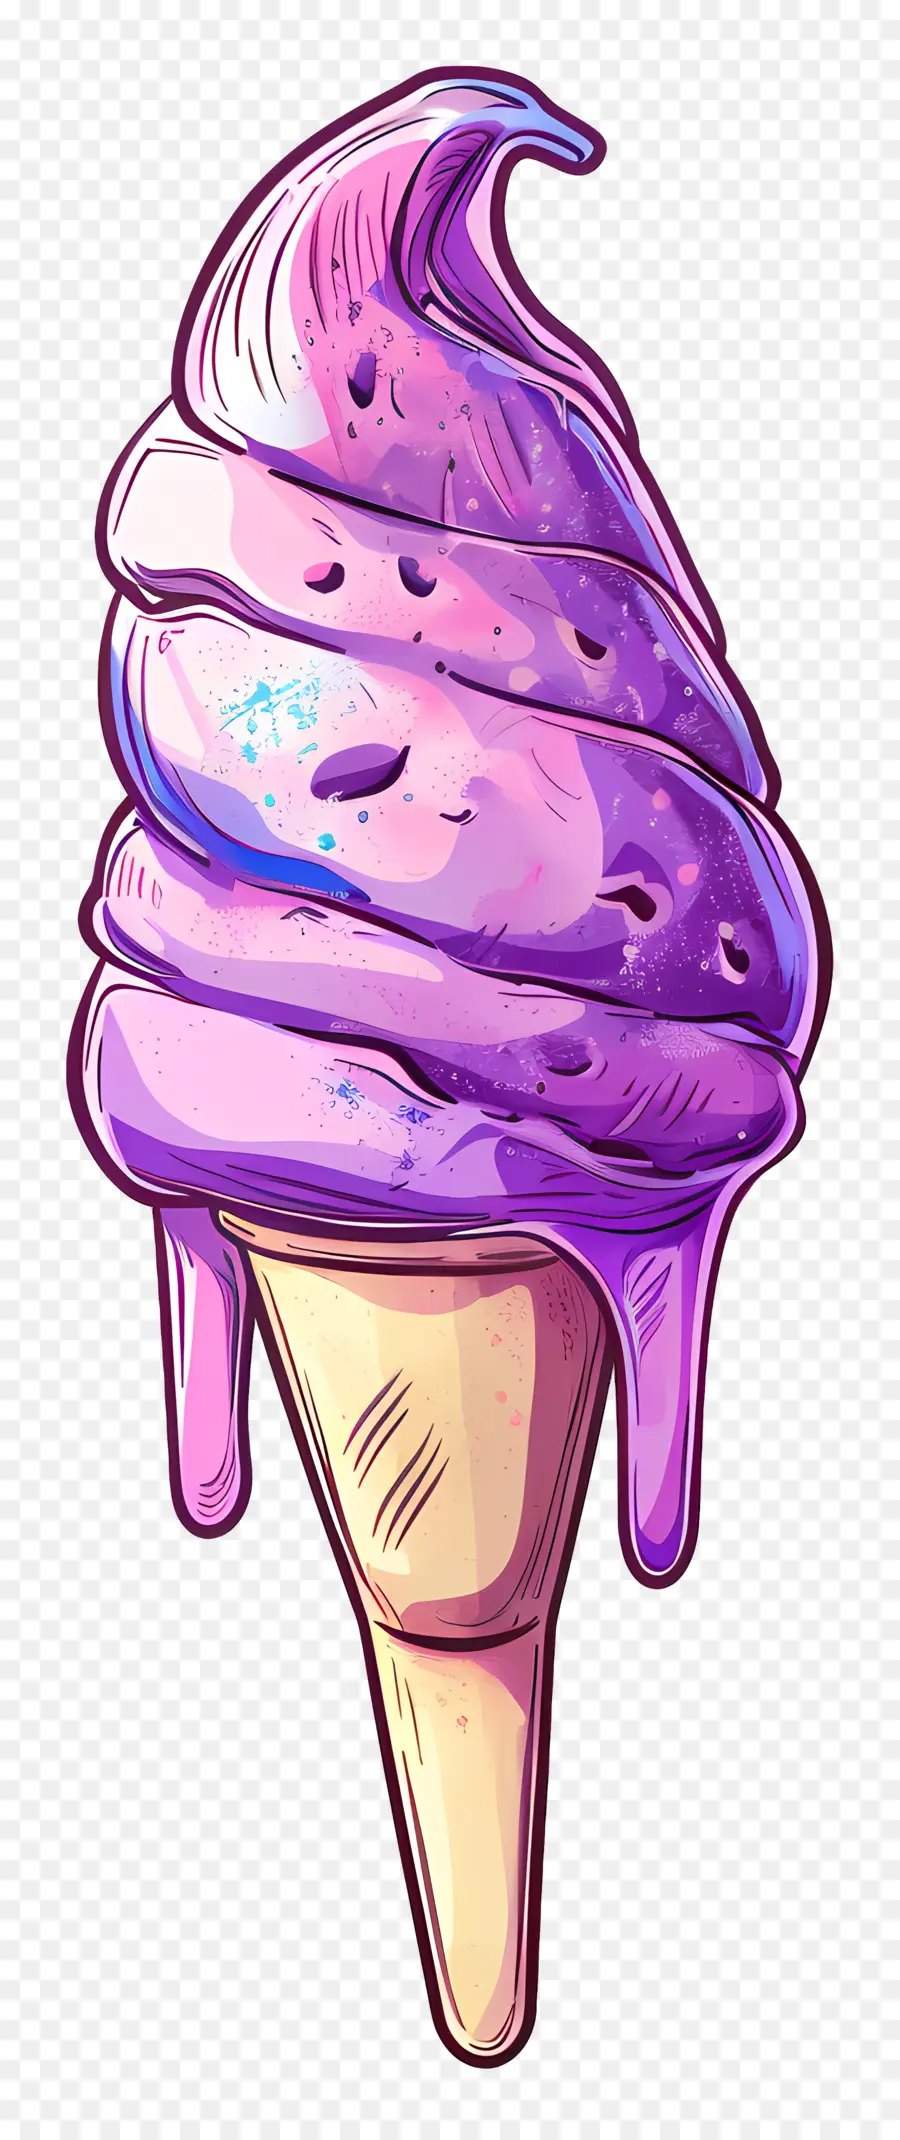 gelato - Cono gelato viola con gocce blu